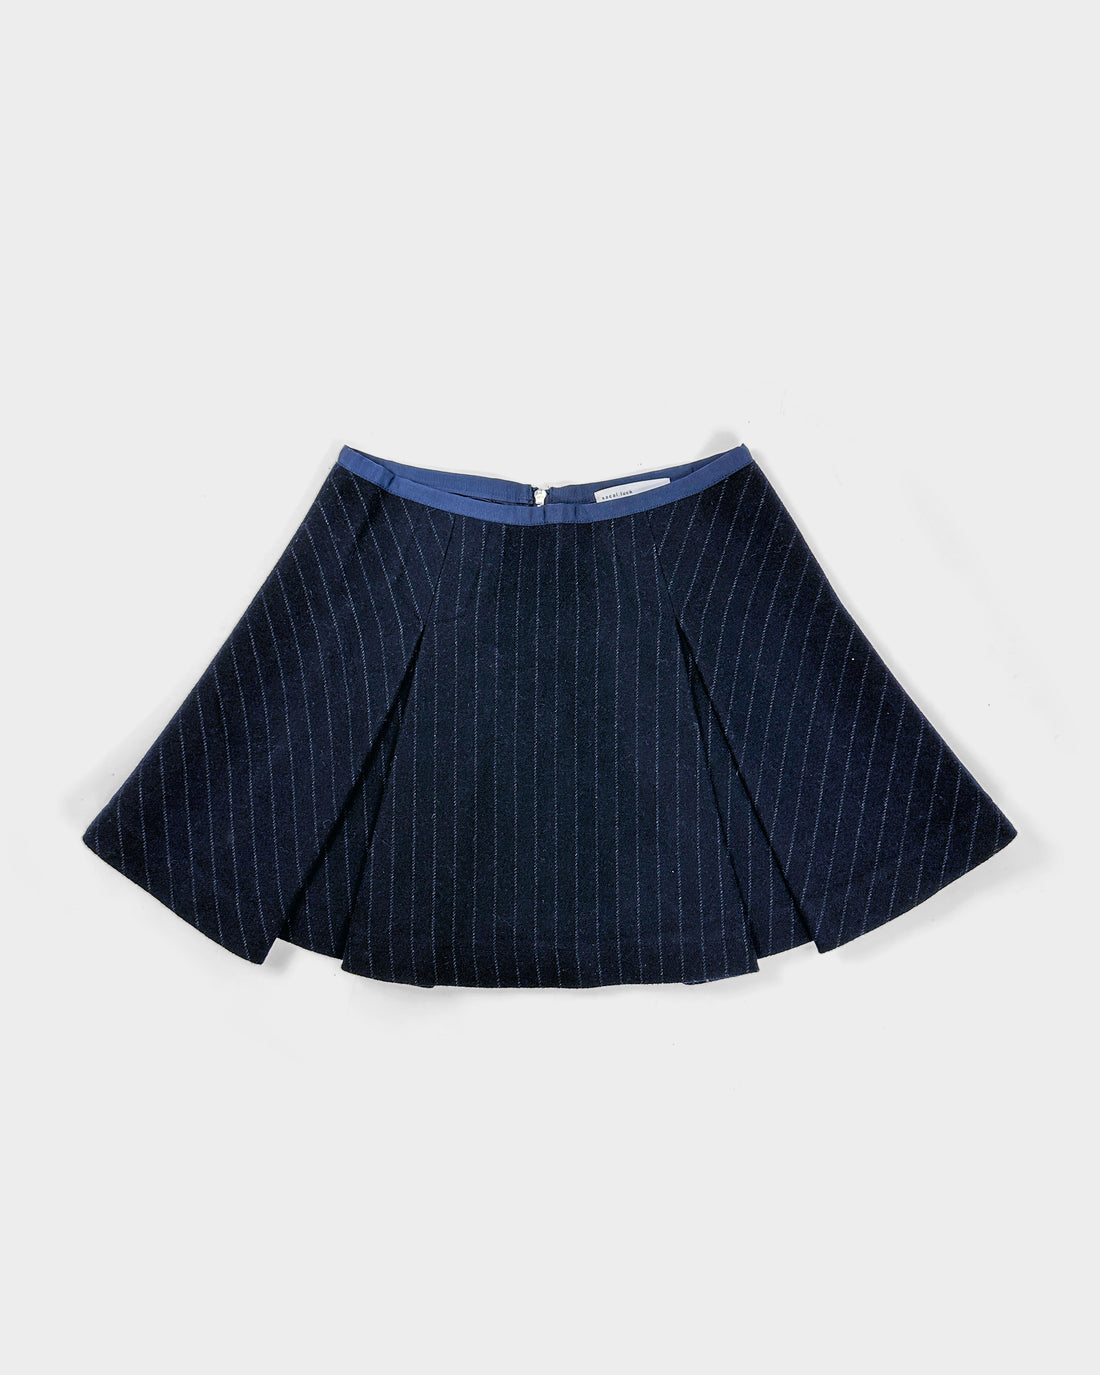 Sacai Wool Blue Pleated Skirt 2000's